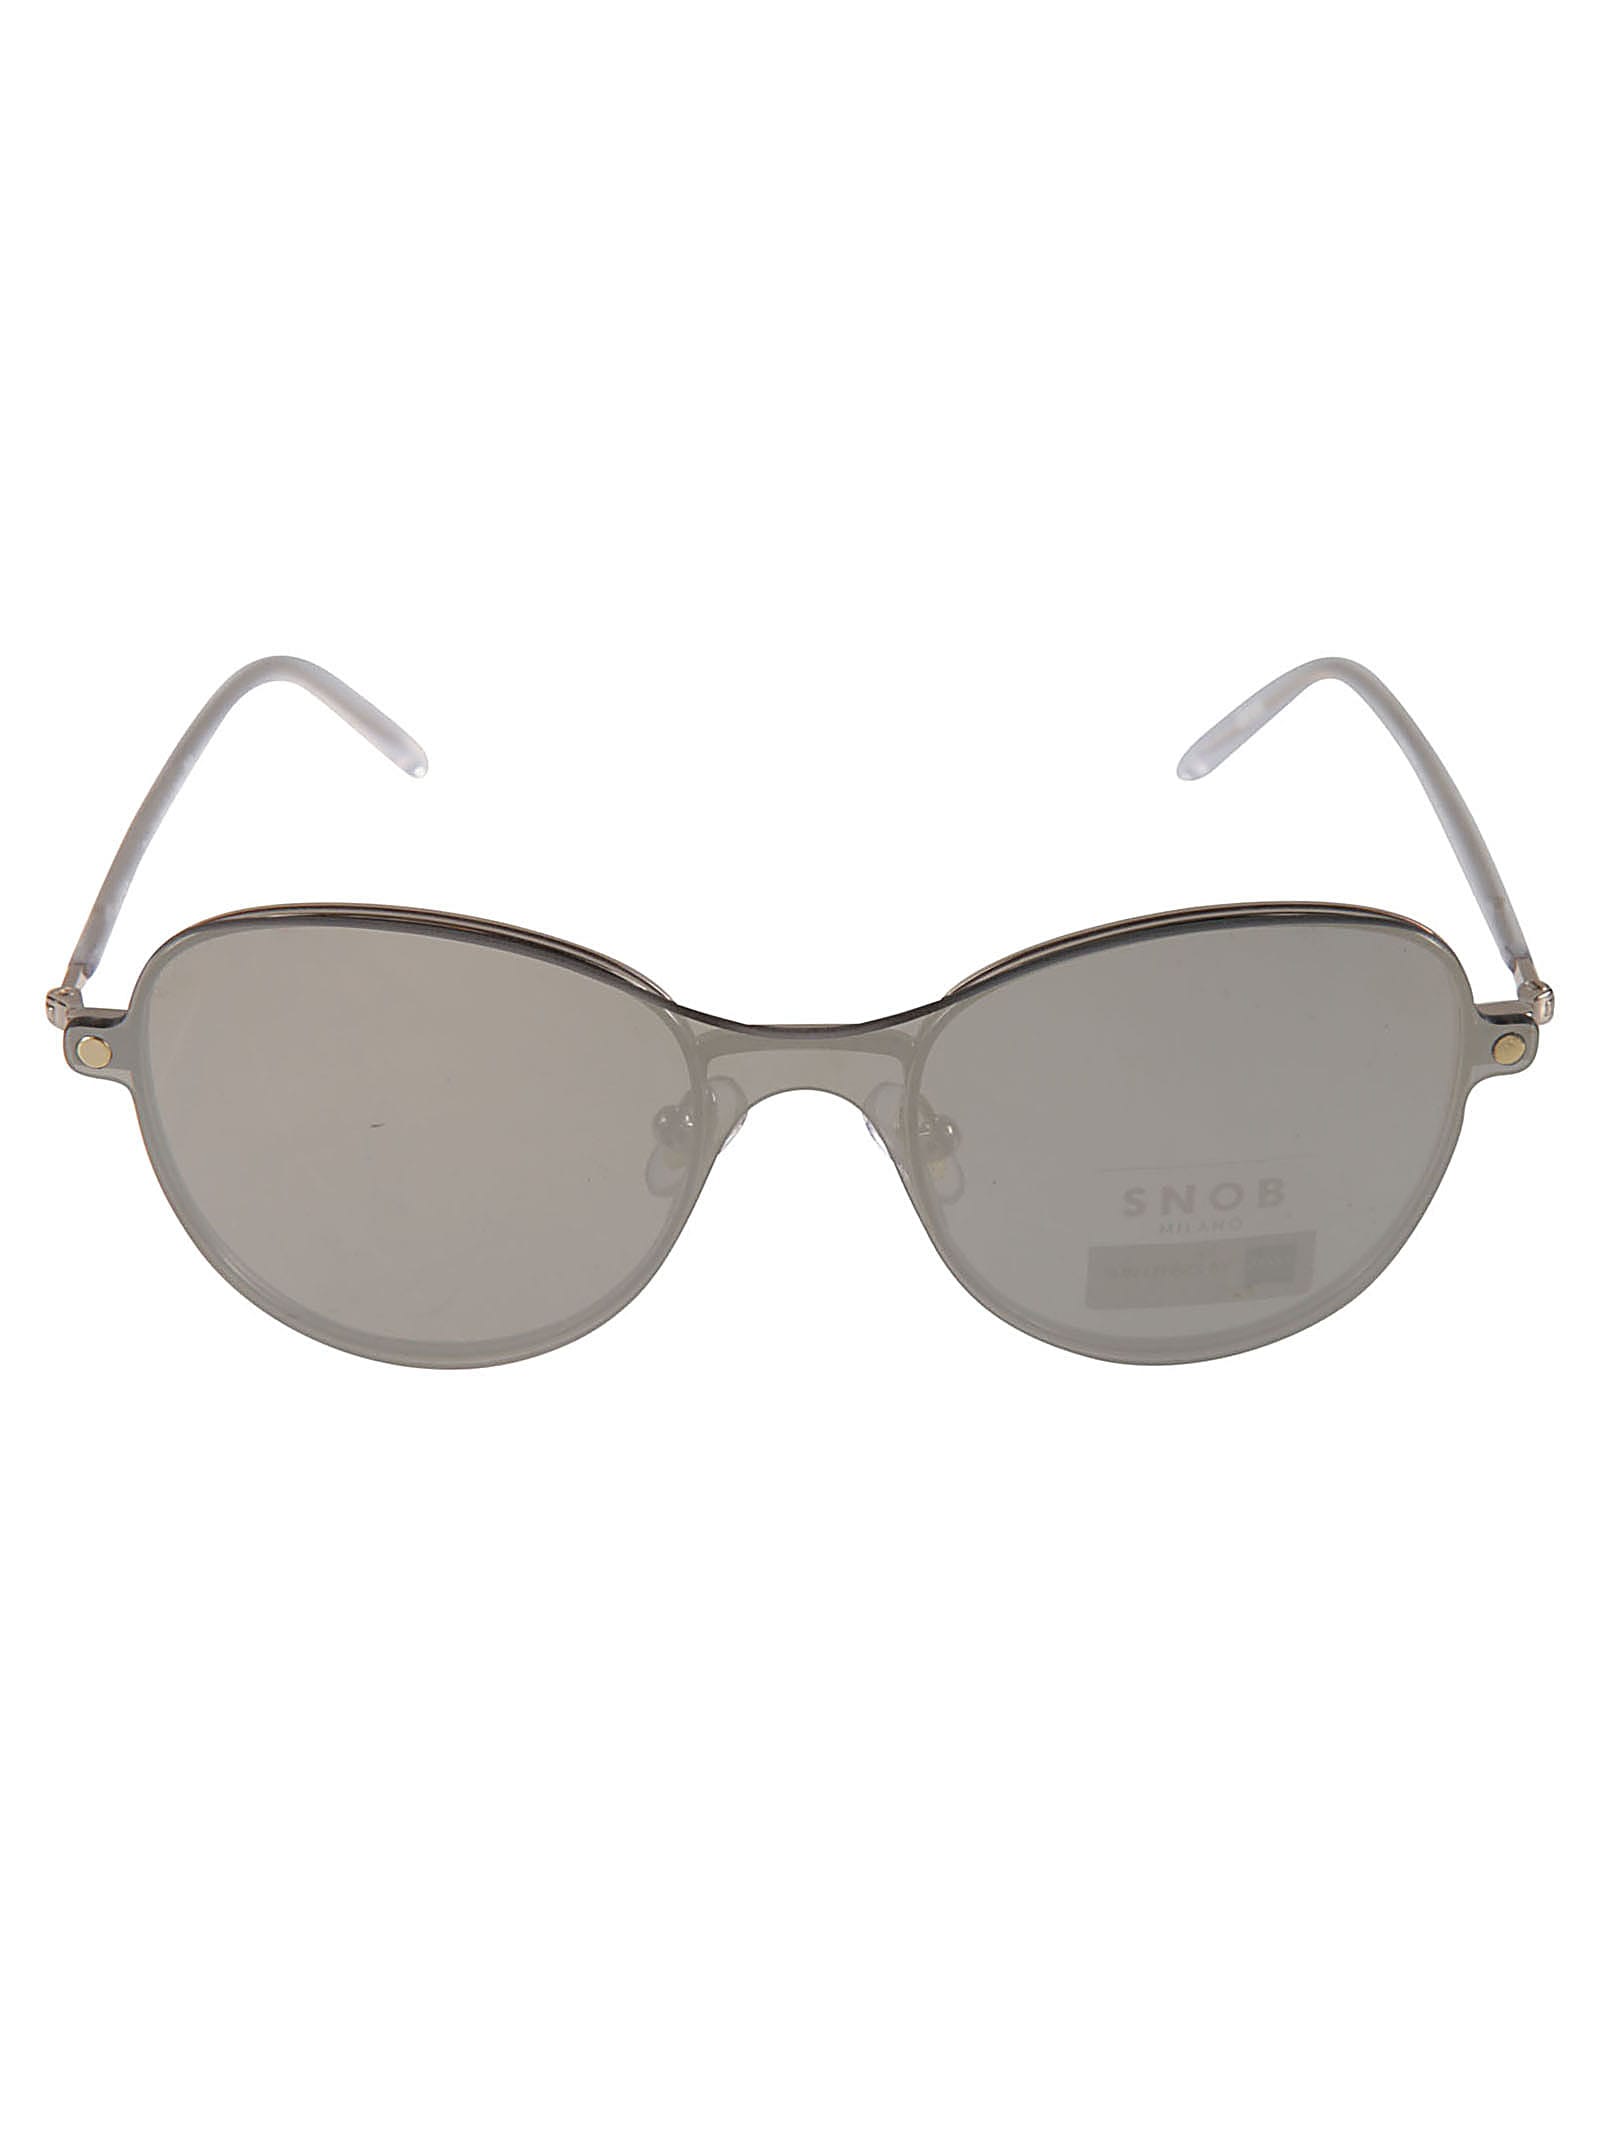 Snob Milano Removable Lens Sunglasses